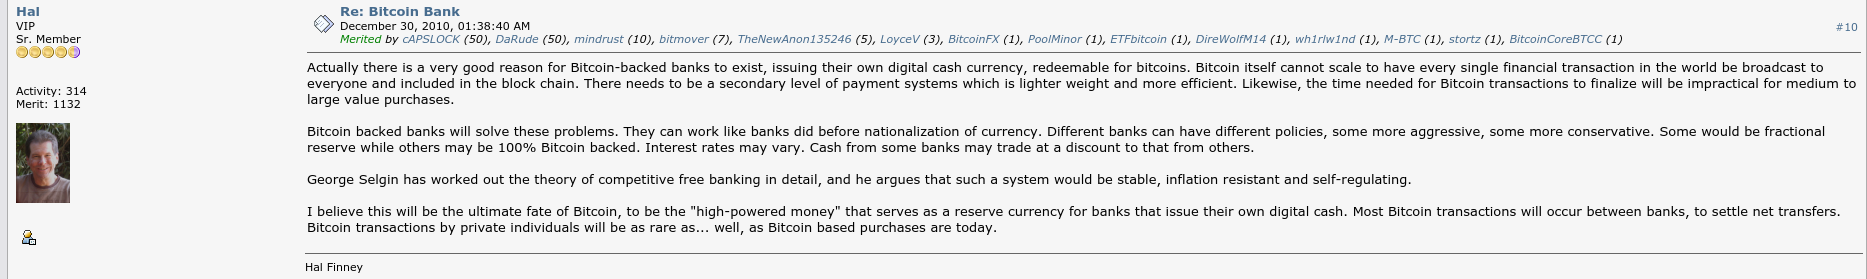 Hal Finney Banque Bitcoin